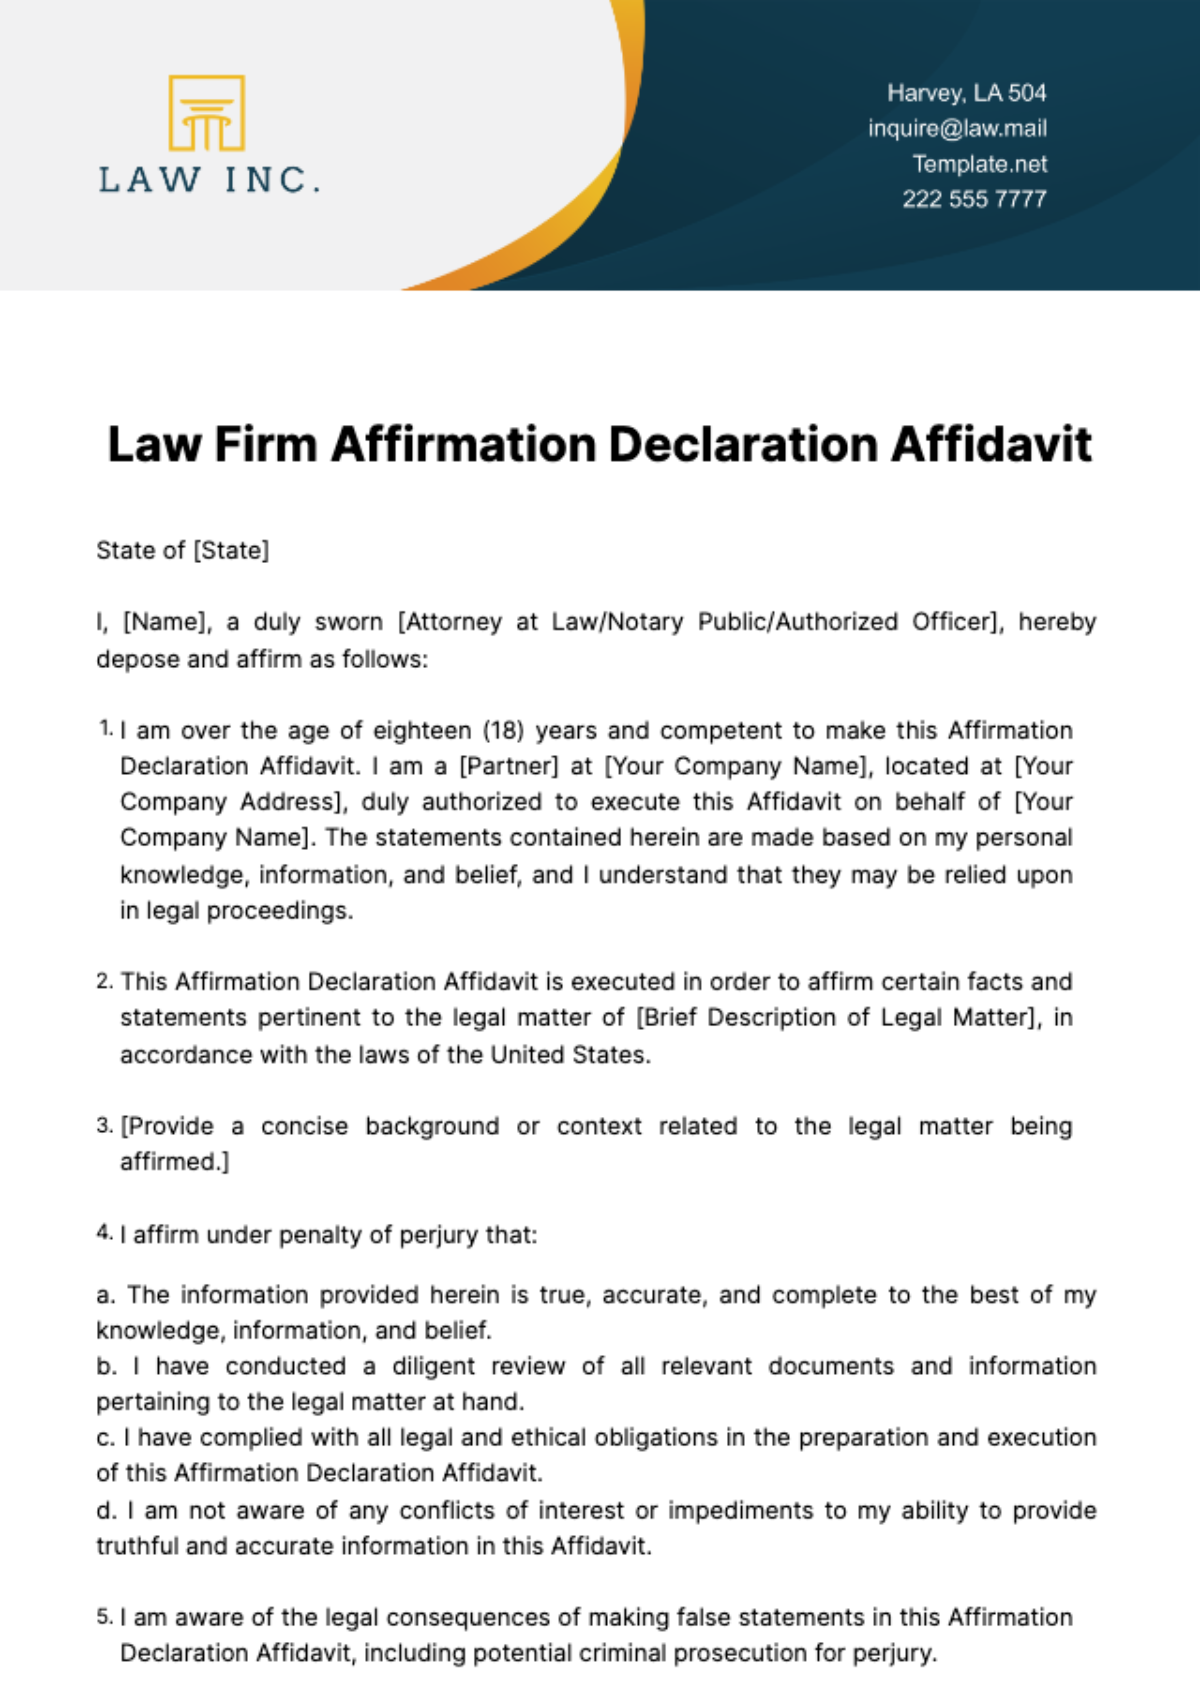 Free Law Firm Affirmation Declaration Affidavit Template